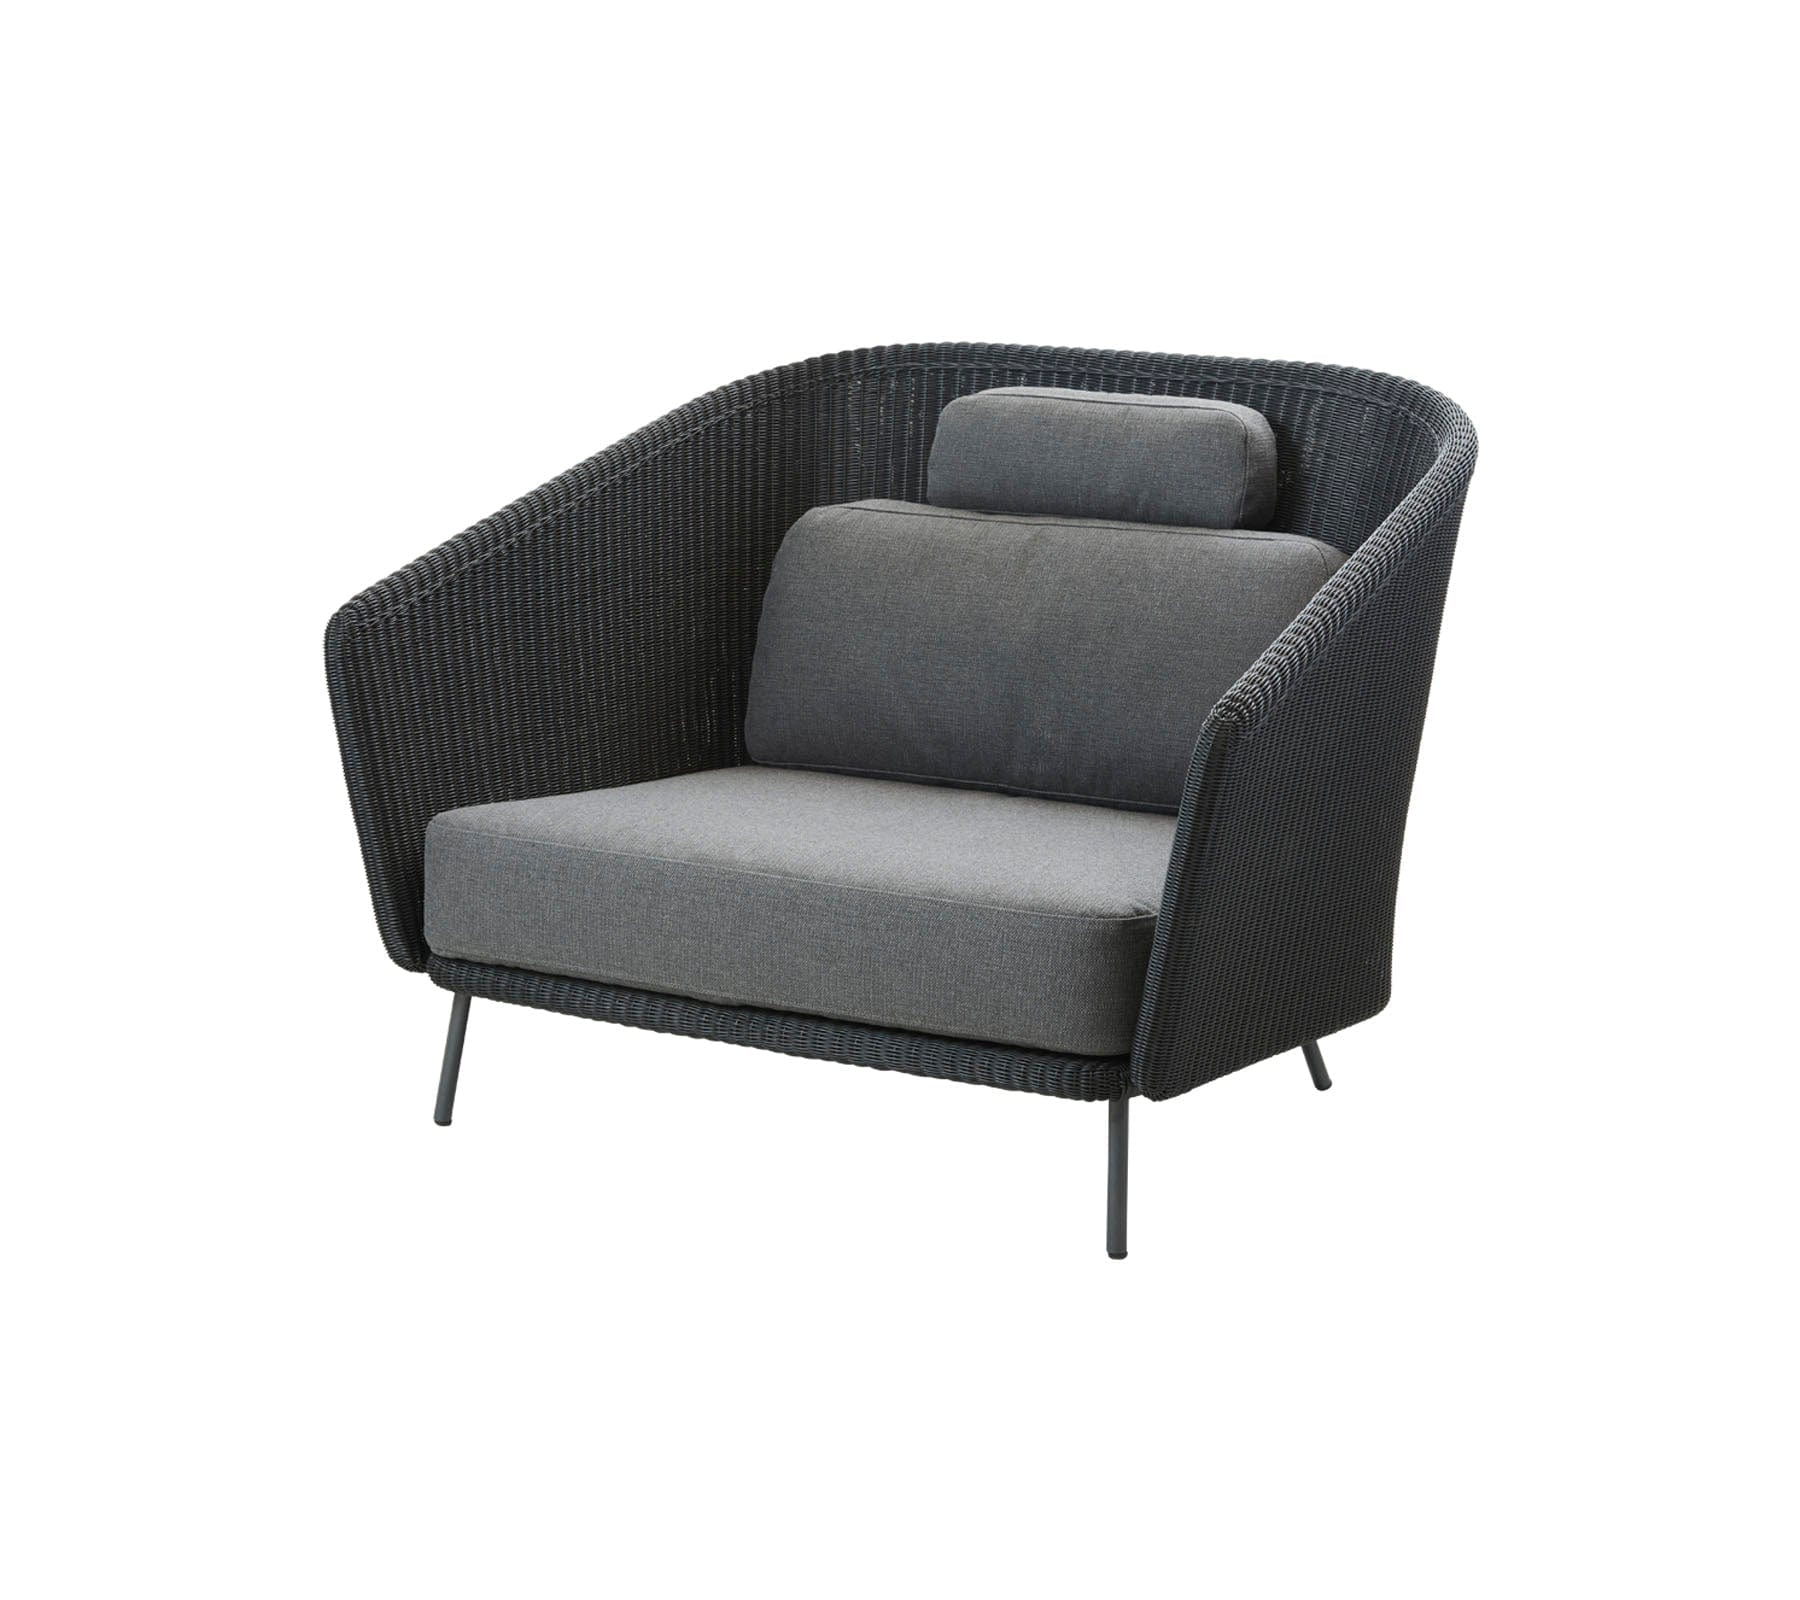 Cane-Line Denmark Cane-line Weave - Graphite - incl. grey Cane-line AirTouch cushion set Cane-Line - Mega lounge chair, incl. grey AirTouch cushions | 54102LGAITG